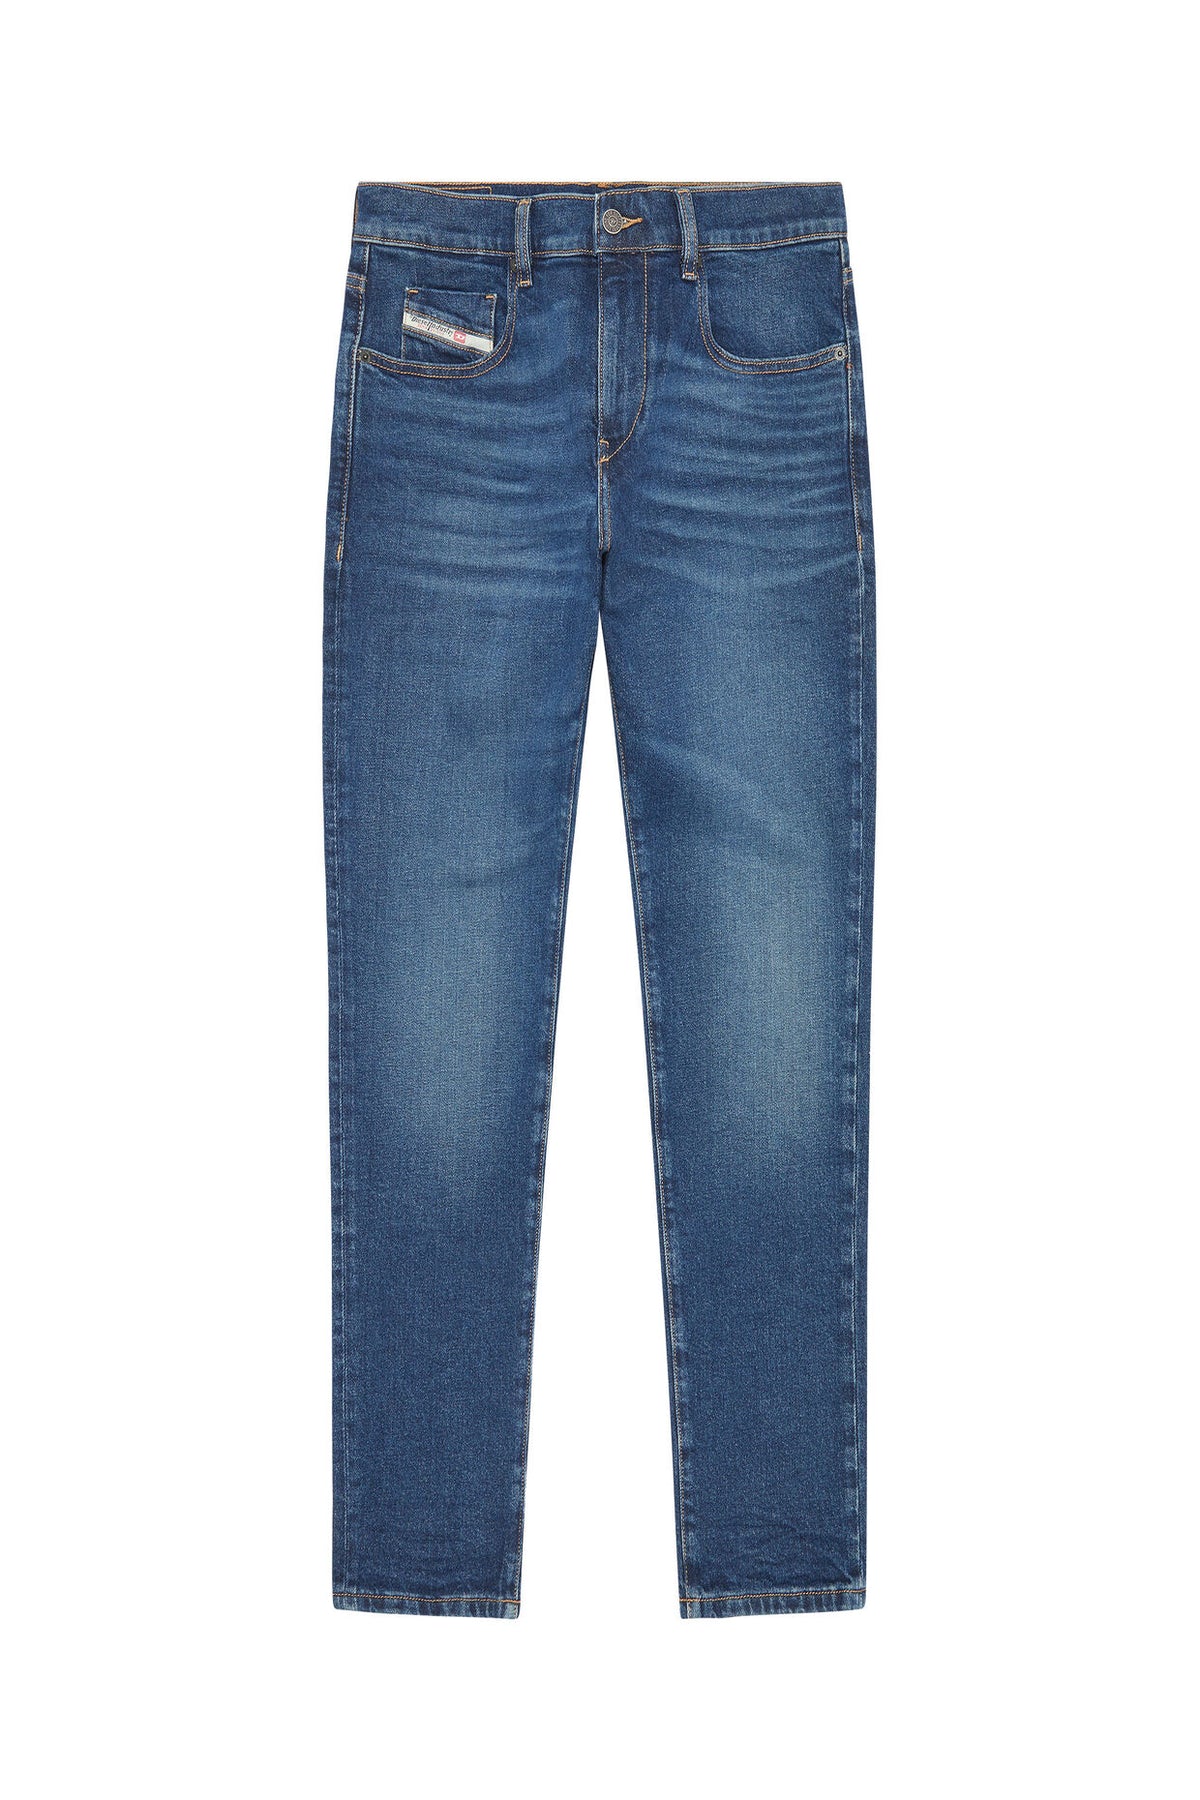 DIESEL Slim Jeans 2019 D-Strukt 0gycs